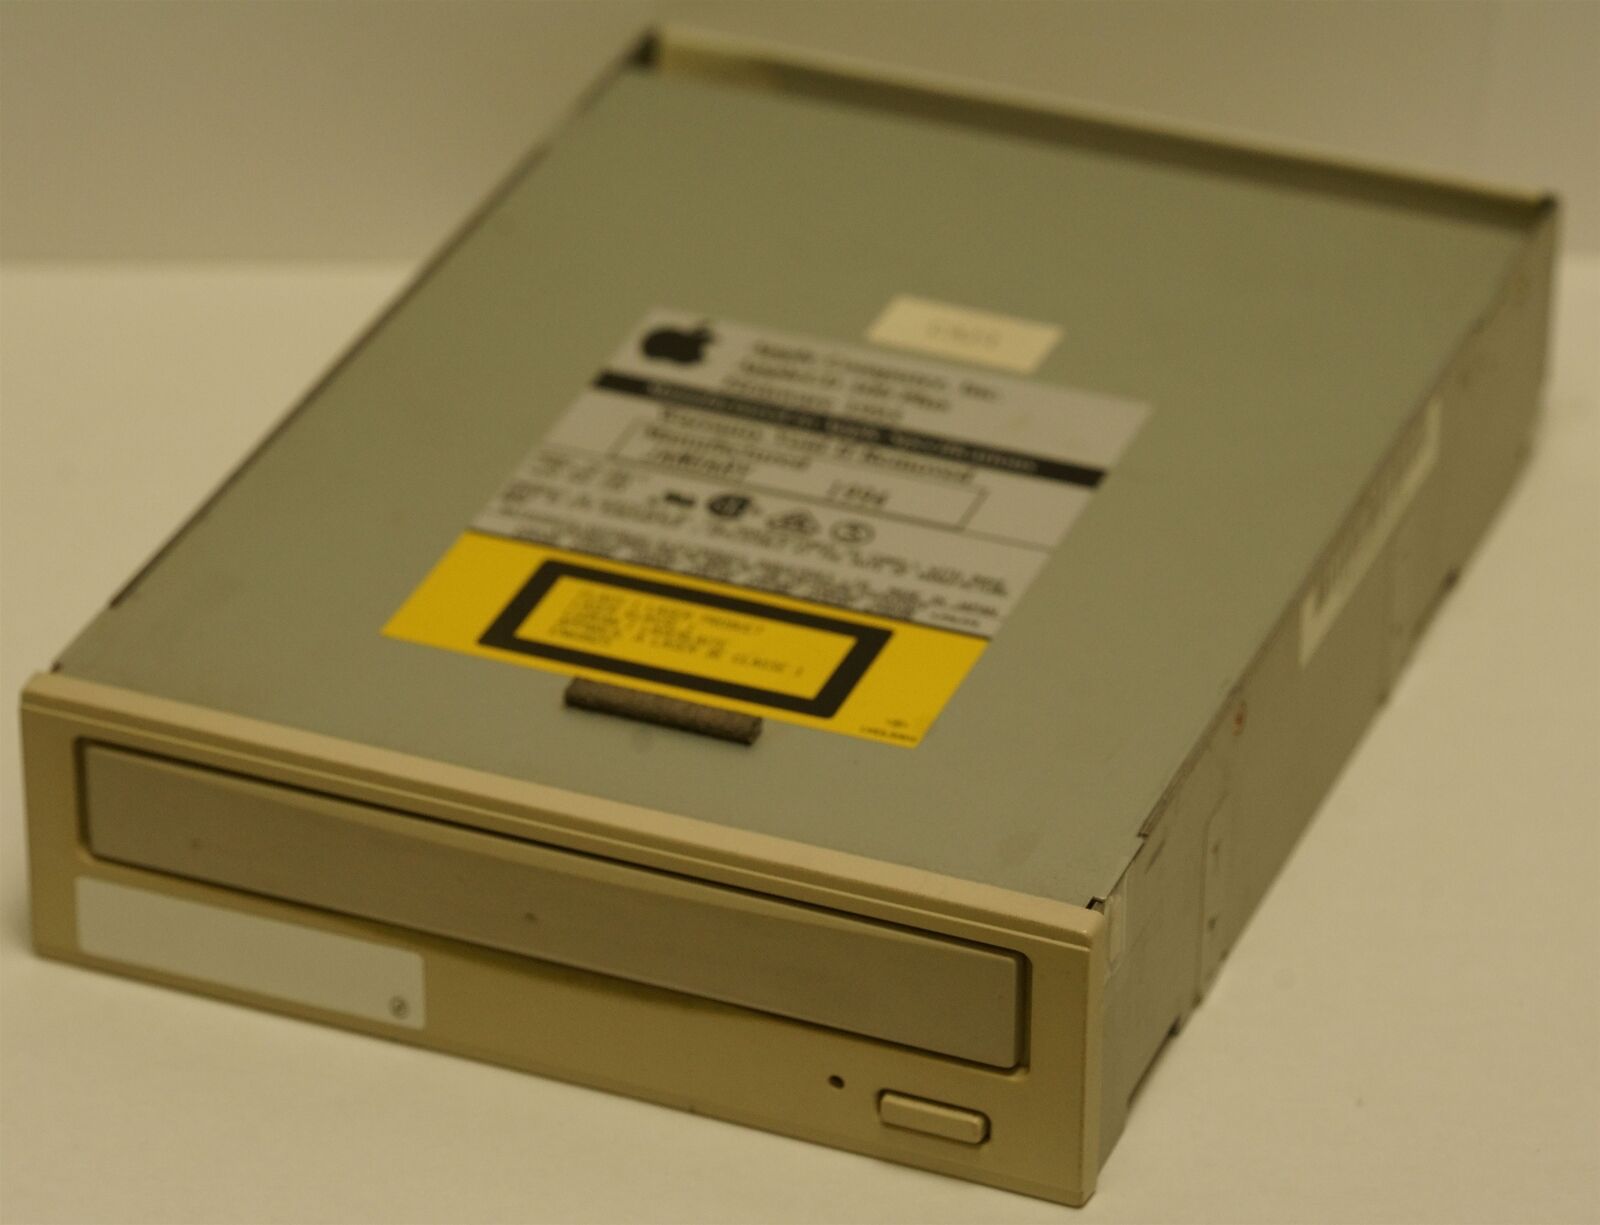 AppleCD 300 Plus CR-503-C ,SCSI, Jan 1994 , for Macintosh